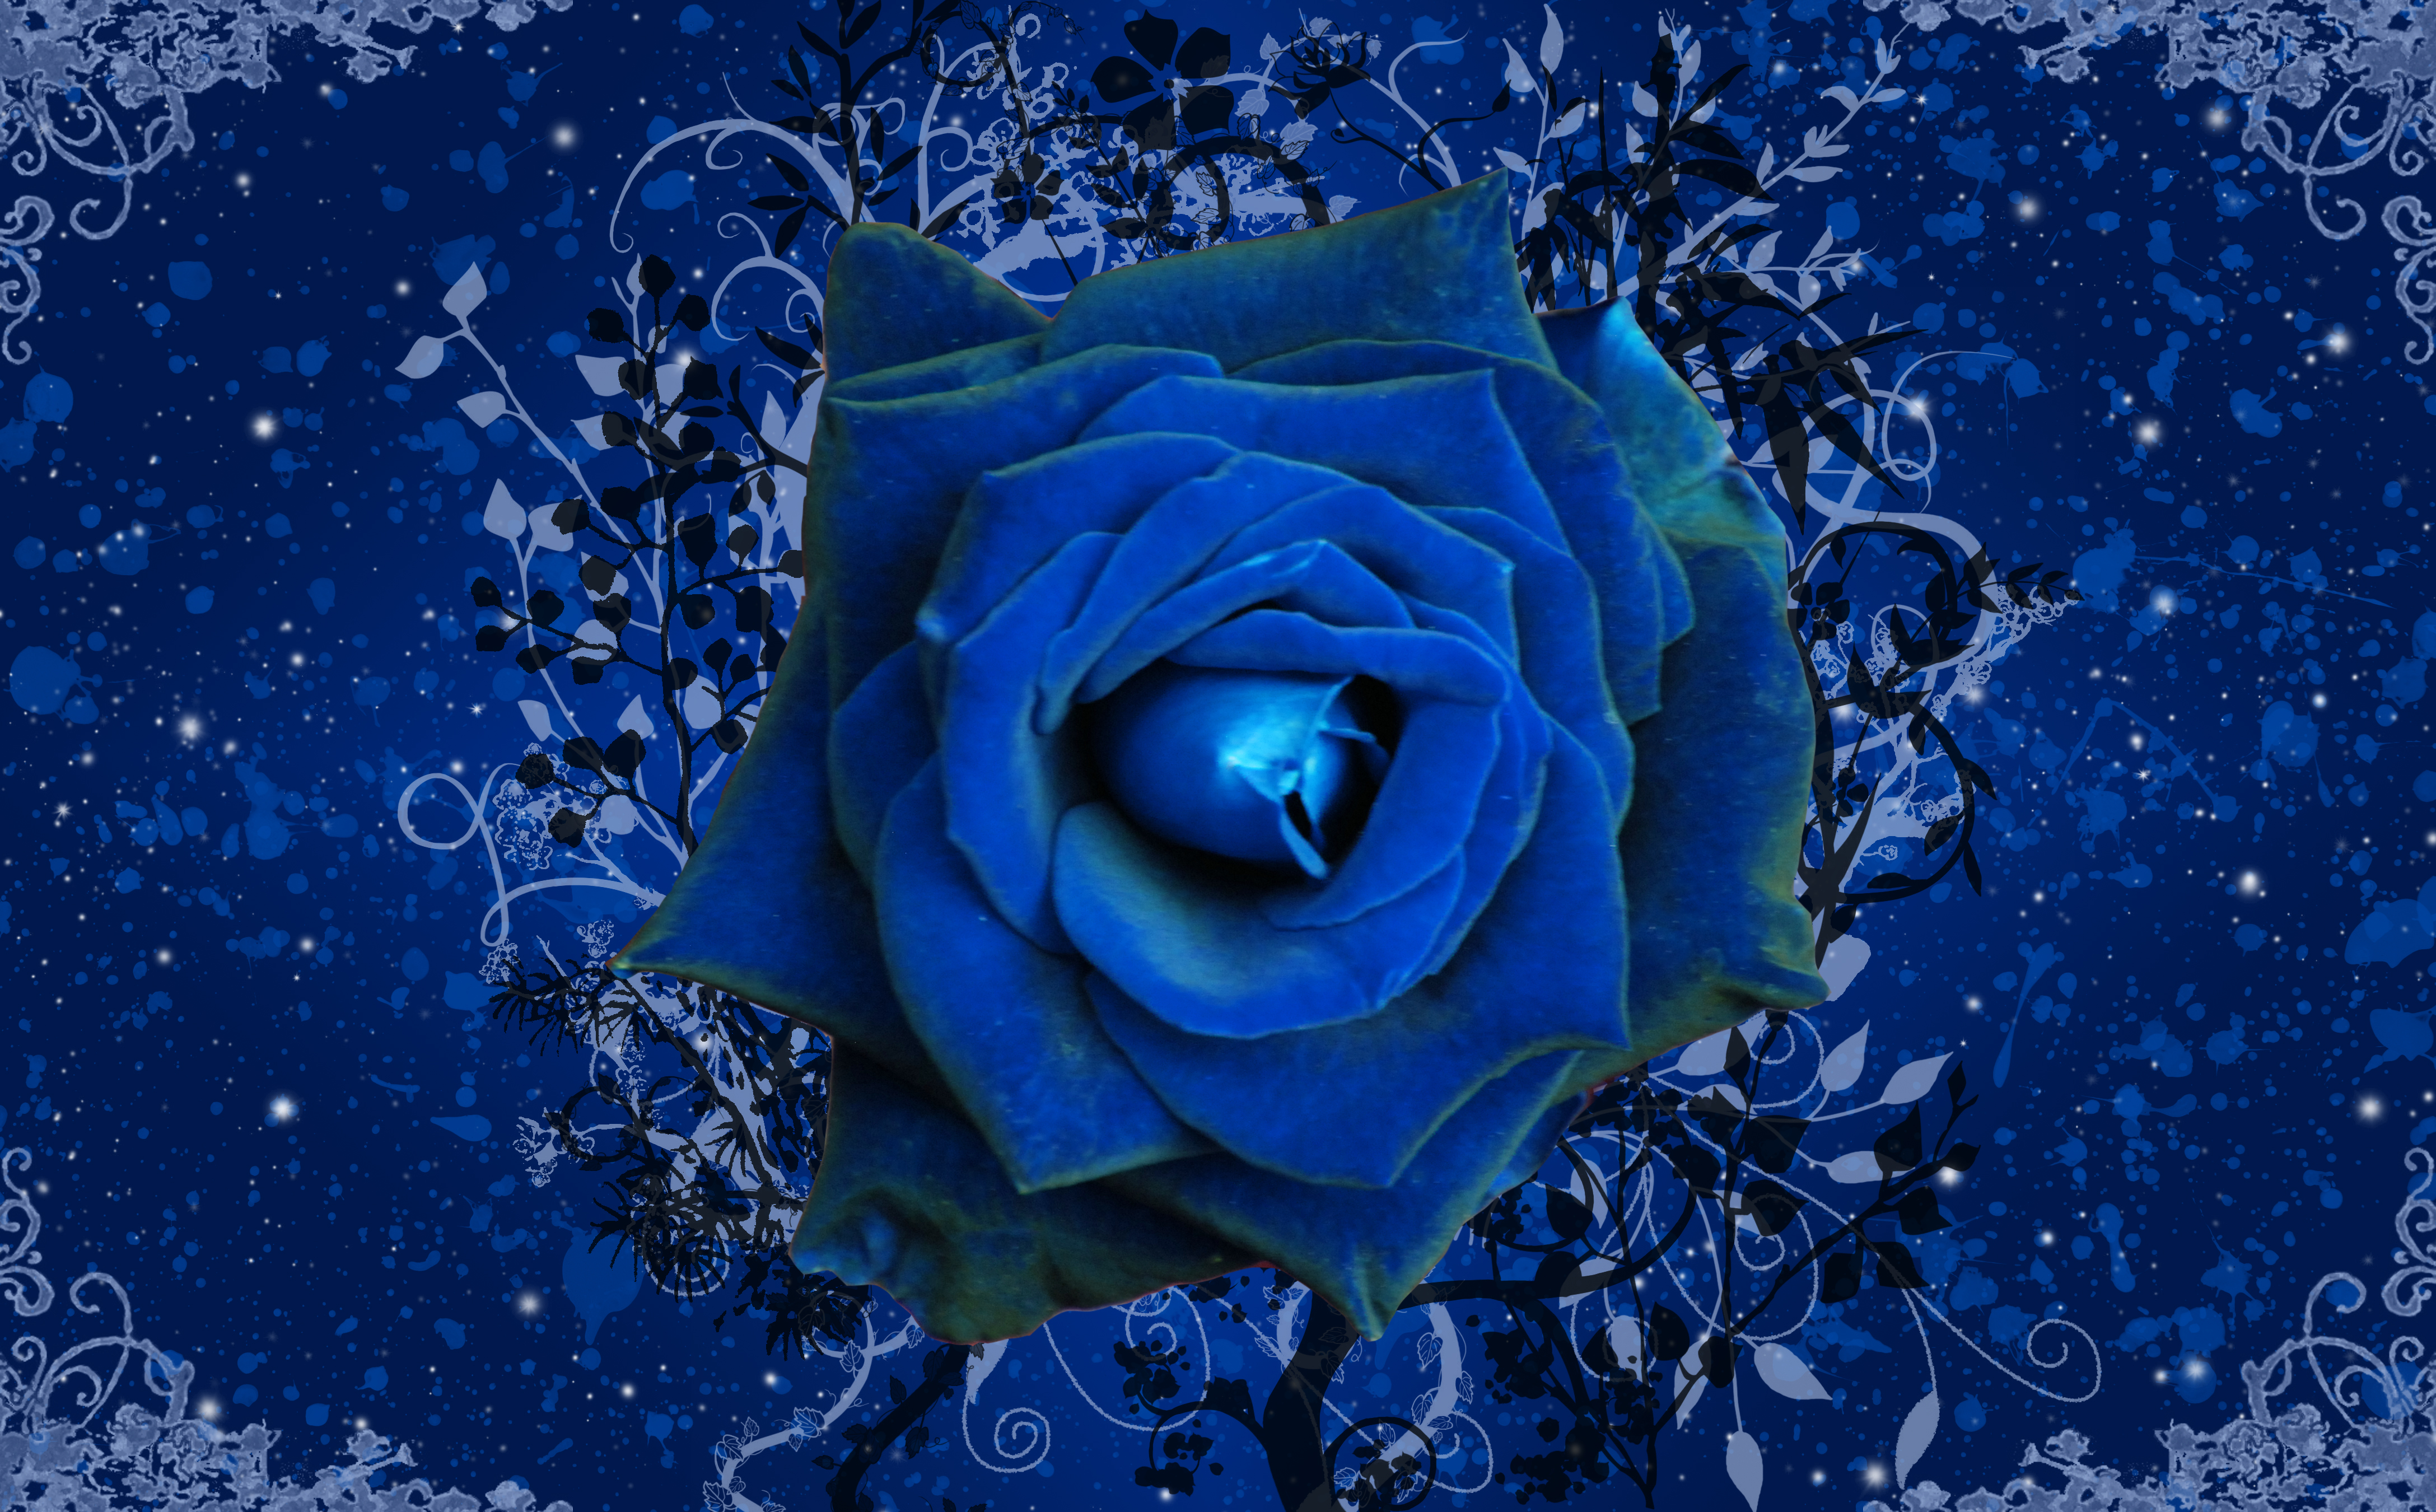 rose, blue flower, blue rose, flower, artistic